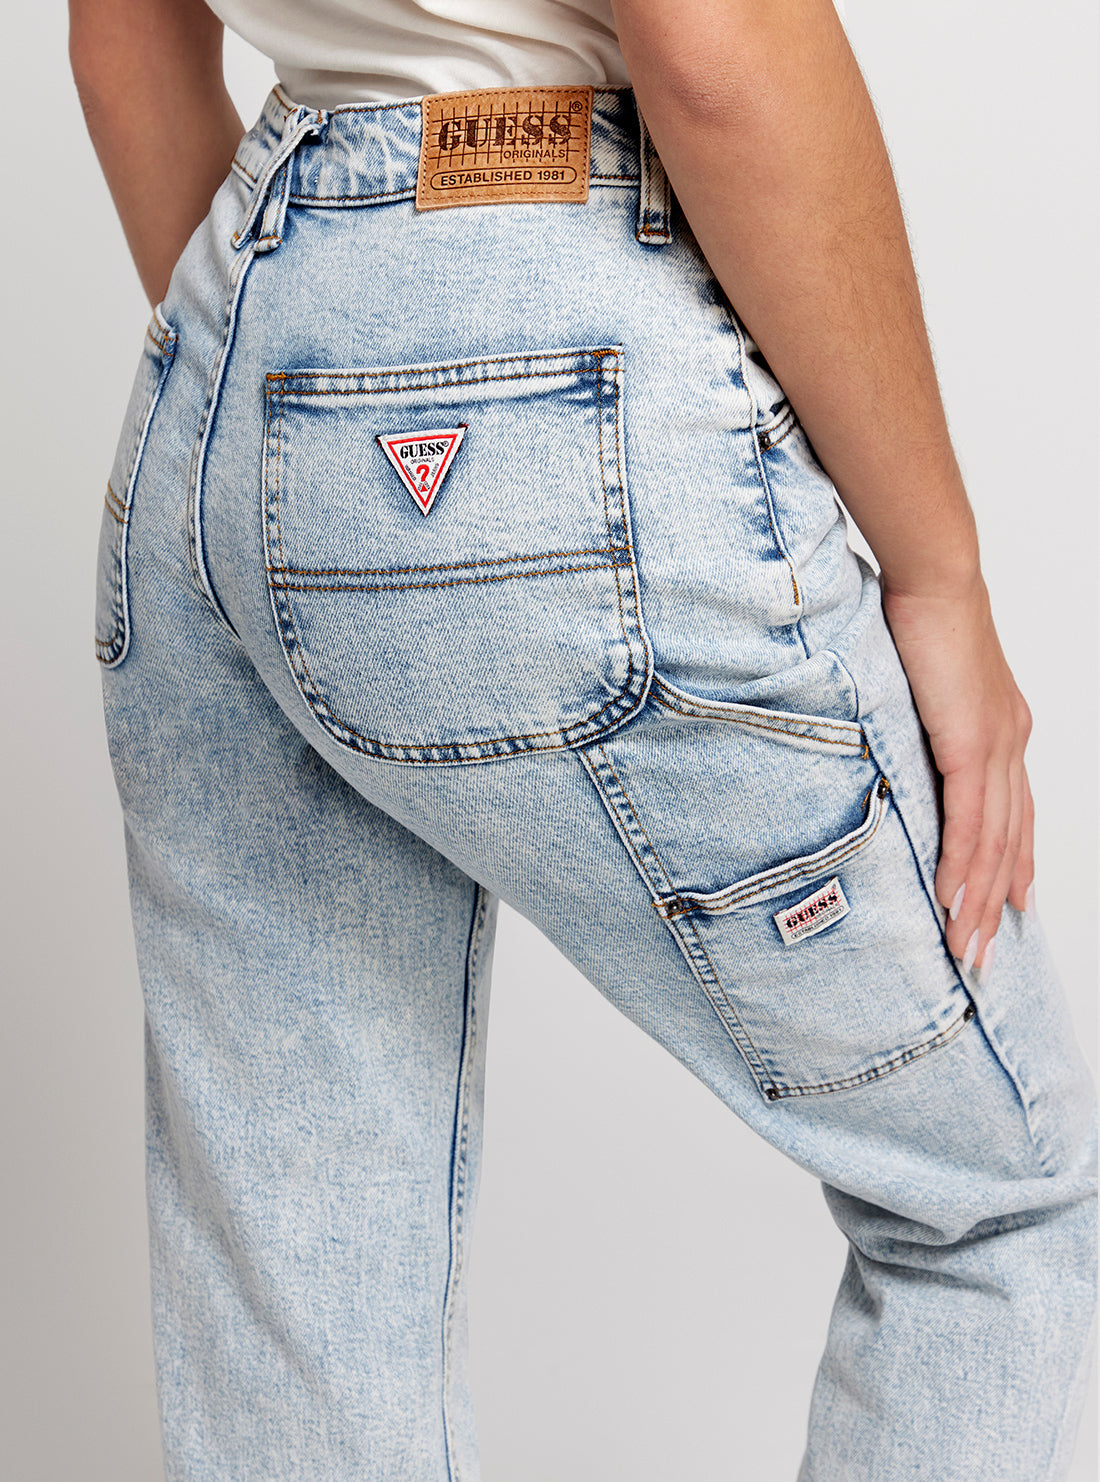 GUESS Originals Kit Mid-Rise Carpenter Denim Jeans in Jackie Acid Wash